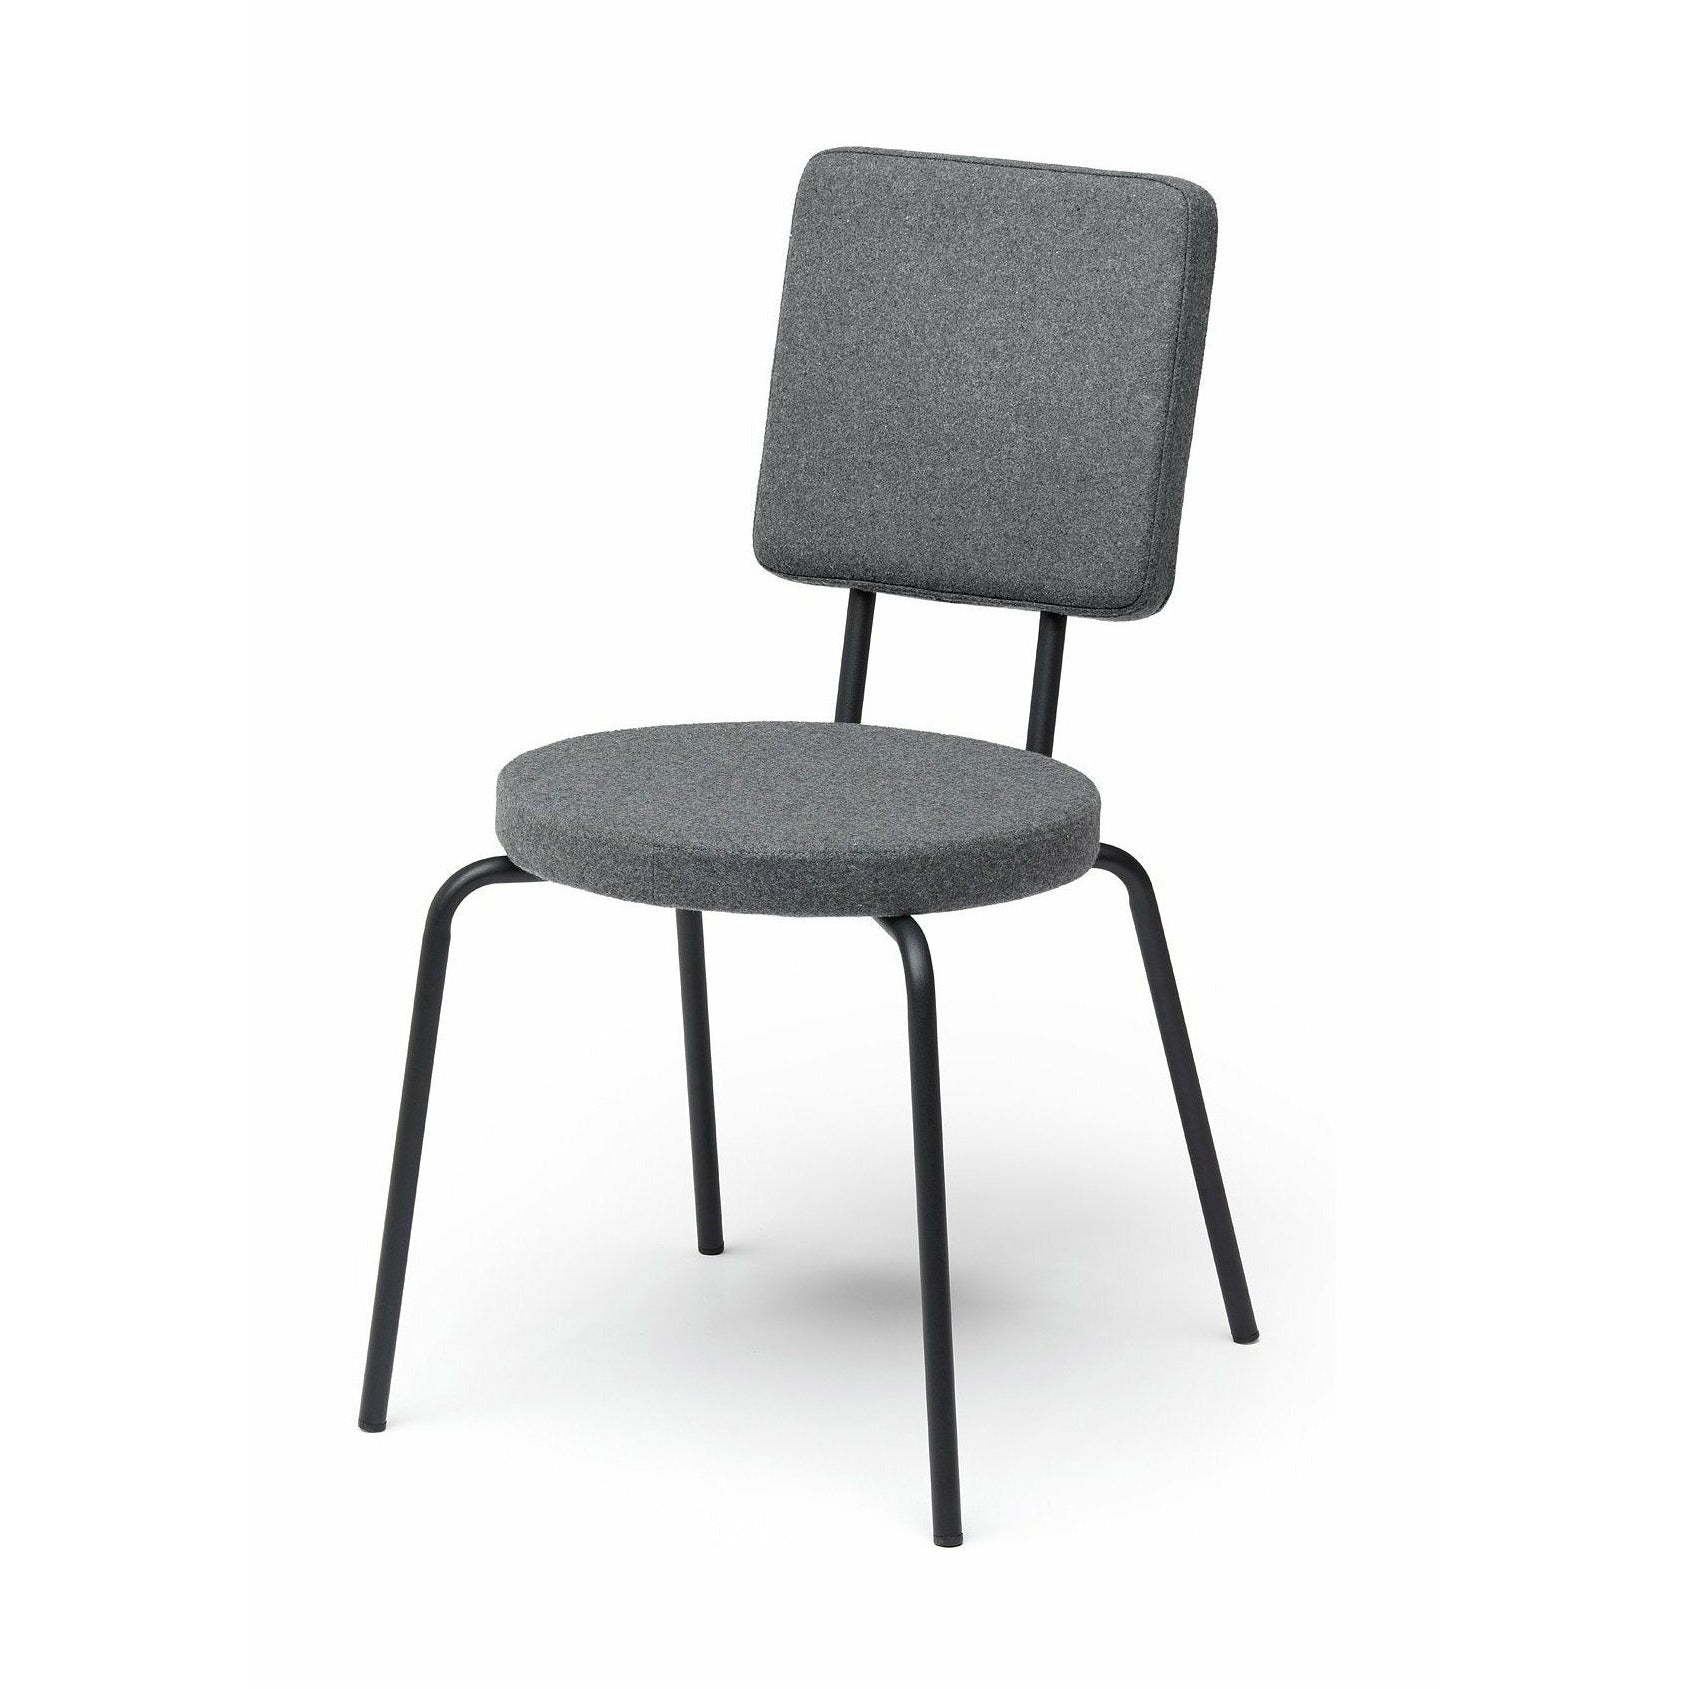 Puik Optie stoel stoel ronde / rugleun vierkant, lichtgrijs